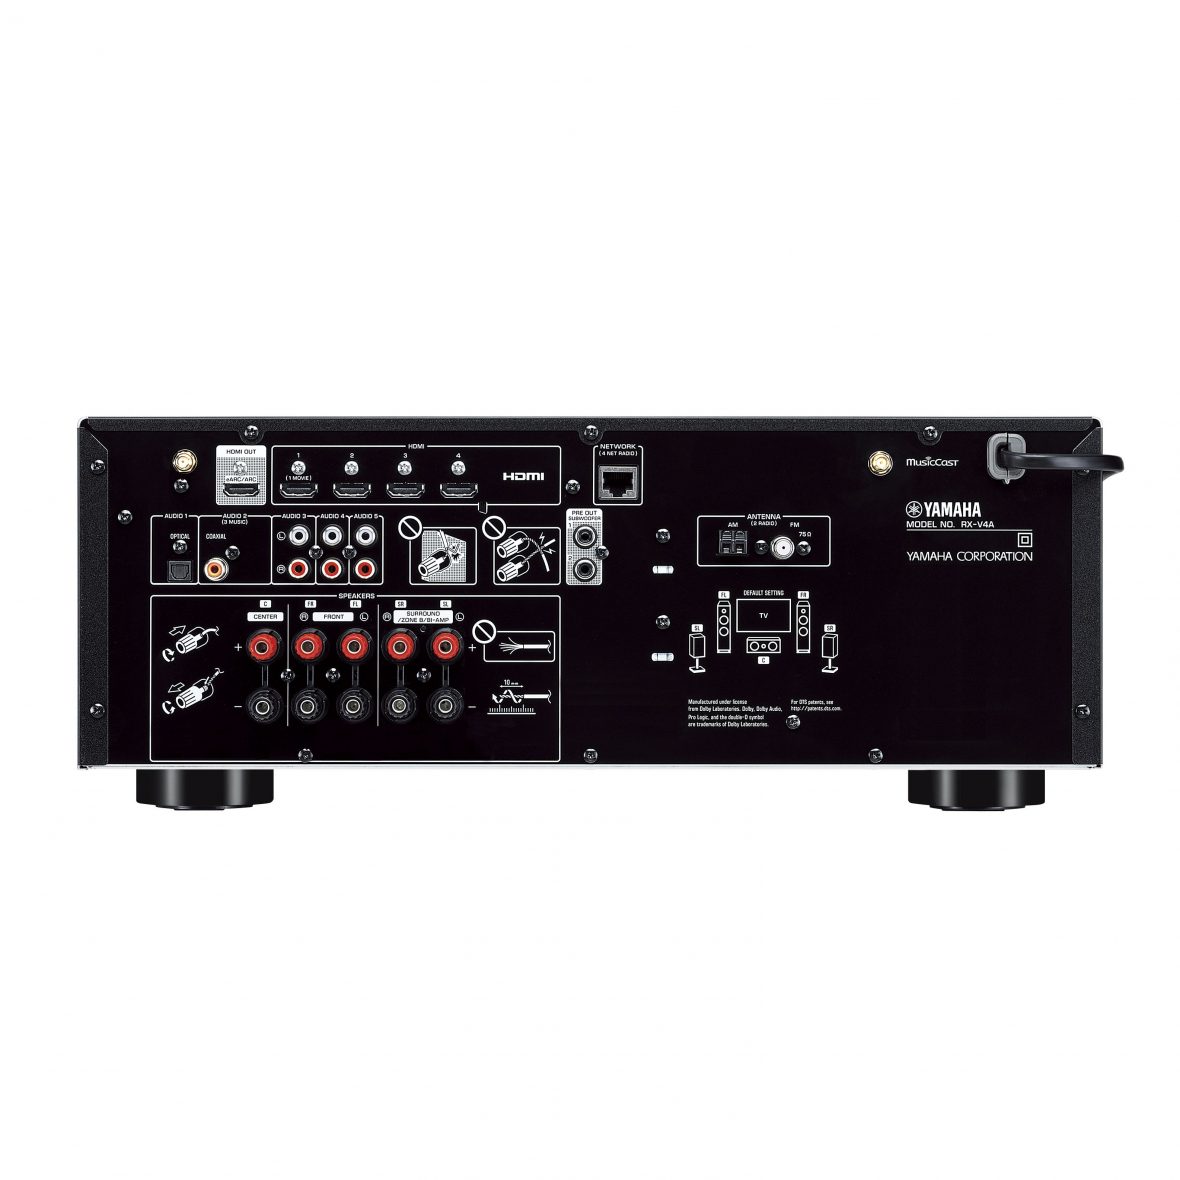 Yamaha-RX-V4A-av-receiverreUCRTSPV_f820a339cdd1af5d602011f5053aefd8